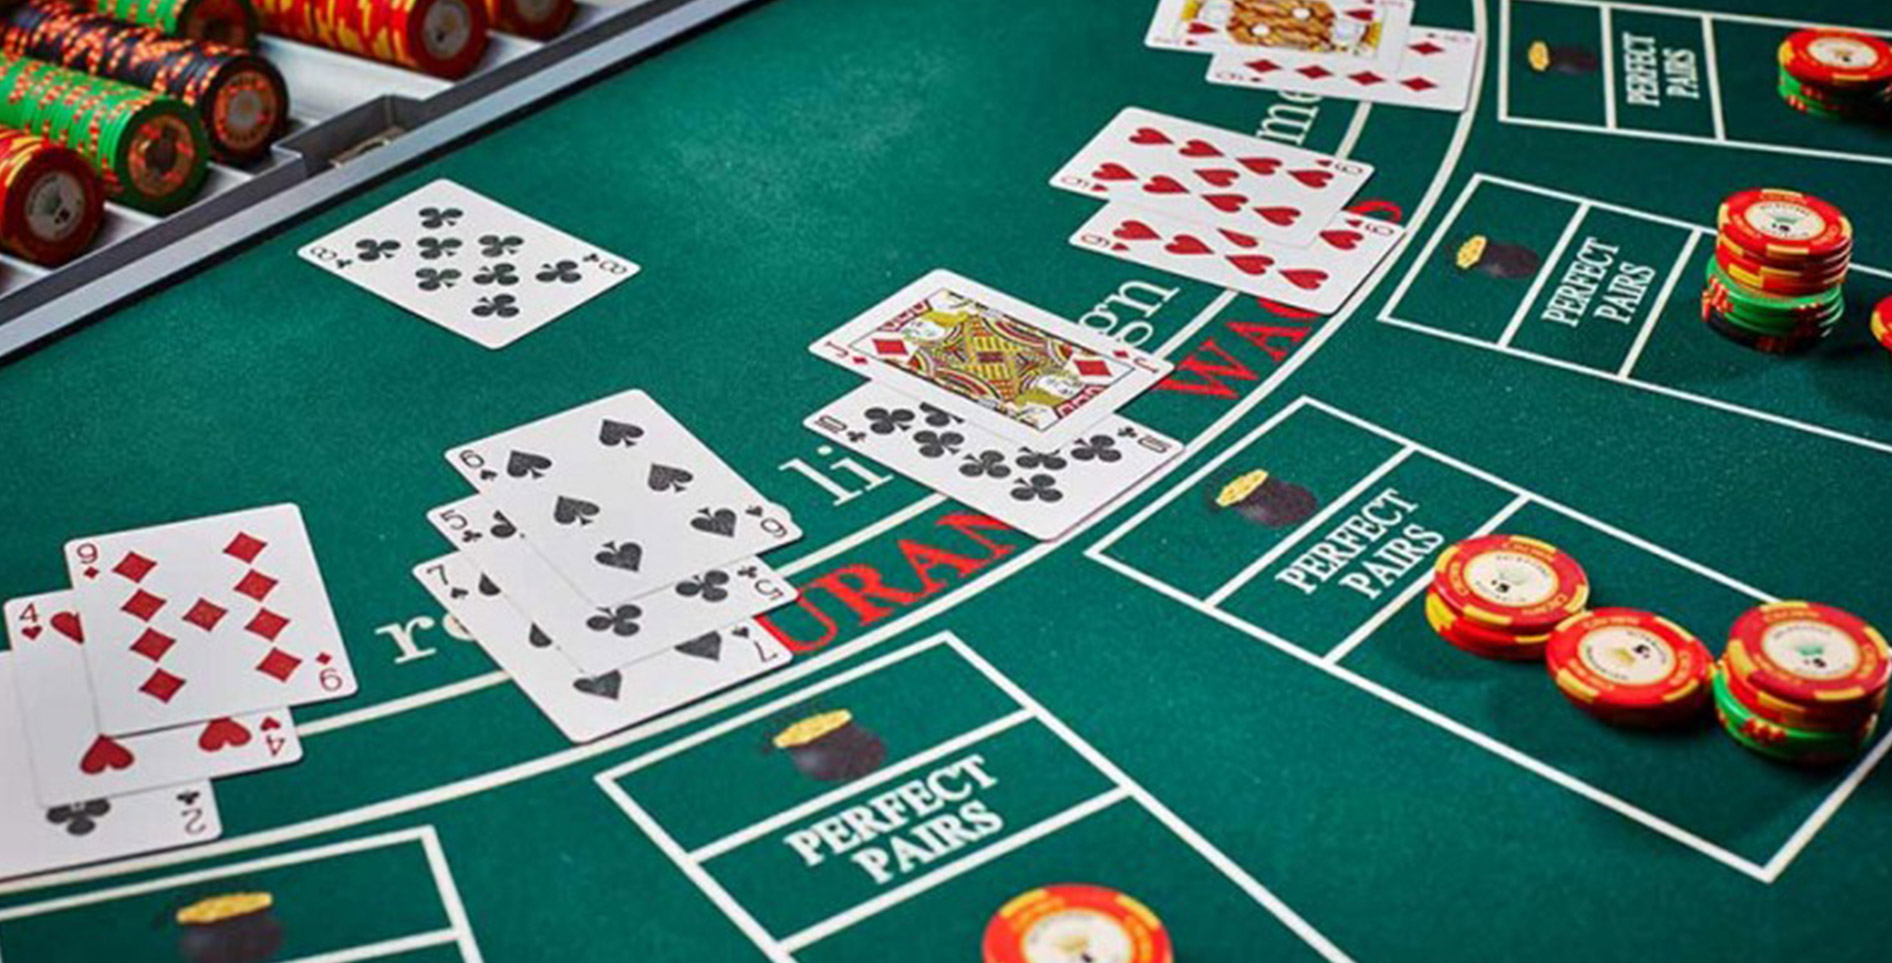 Blackjack online casinos